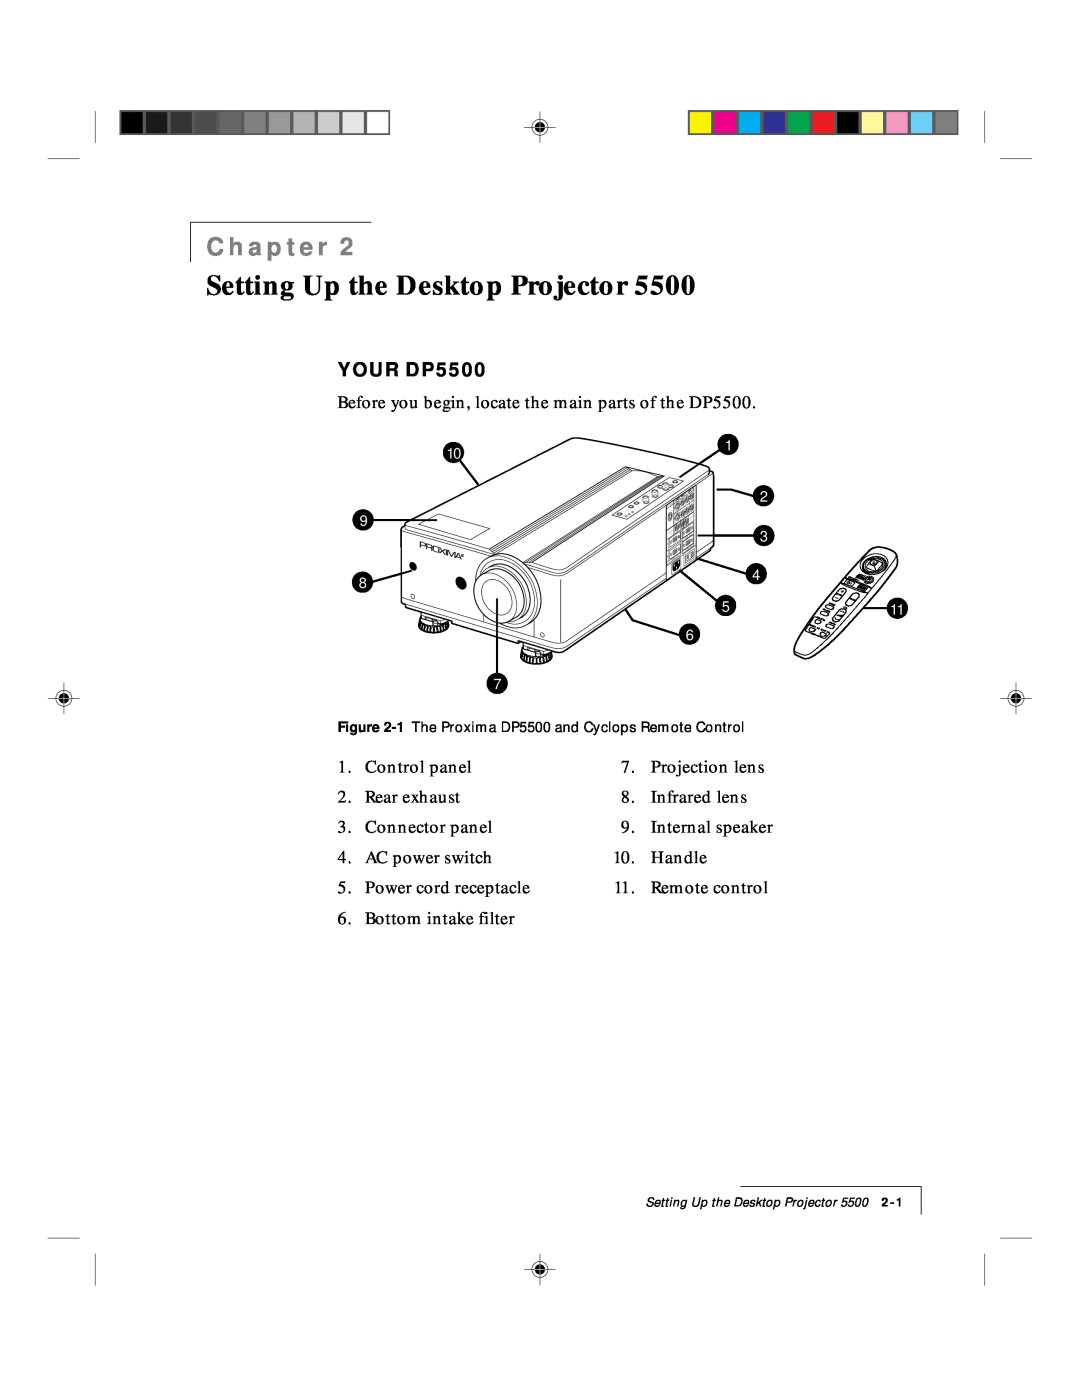 Proxima ASA manual Setting Up the Desktop Projector, YOUR DP5500, Chapter 